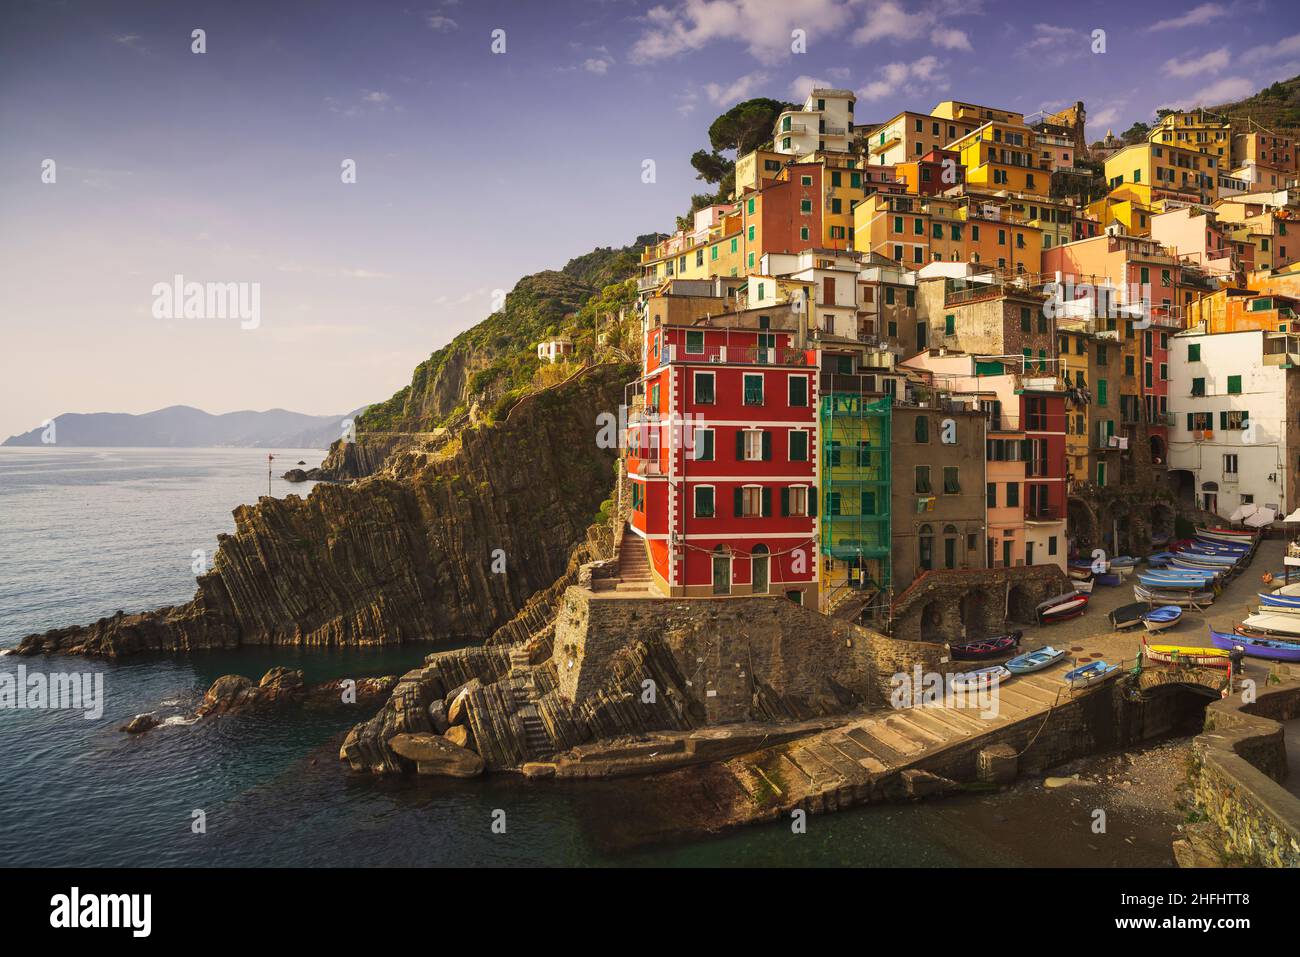 Riomaggiore old town, cape, colorful houses and sea. Seascape in Cinque Terre National Park, Liguria region, Italy, Europe. Stock Photo